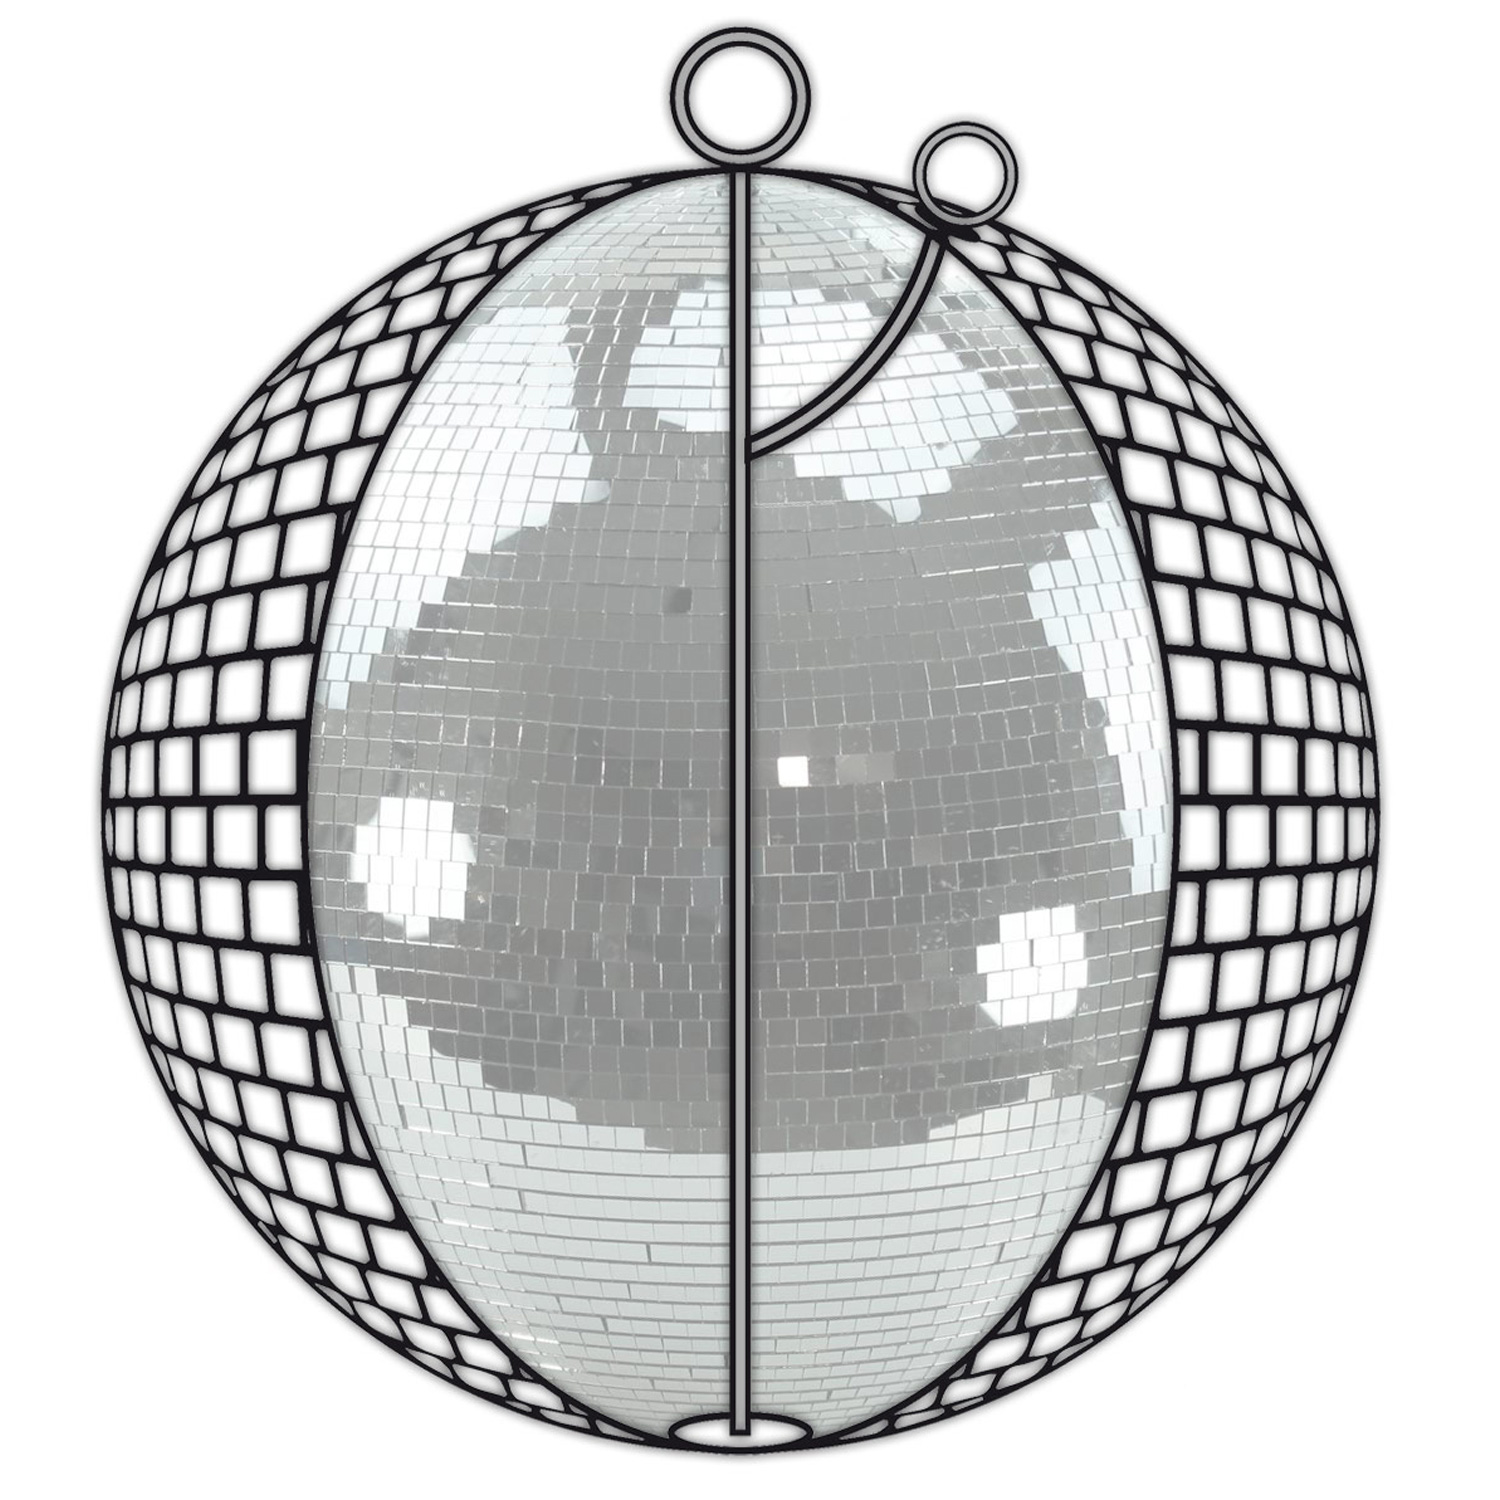 Spiegelkugel 150cm silber chrom- Diskokugel (Discokugel) Party Lichteffekt - Echtglas - mirrorball safety silver chrome color 2